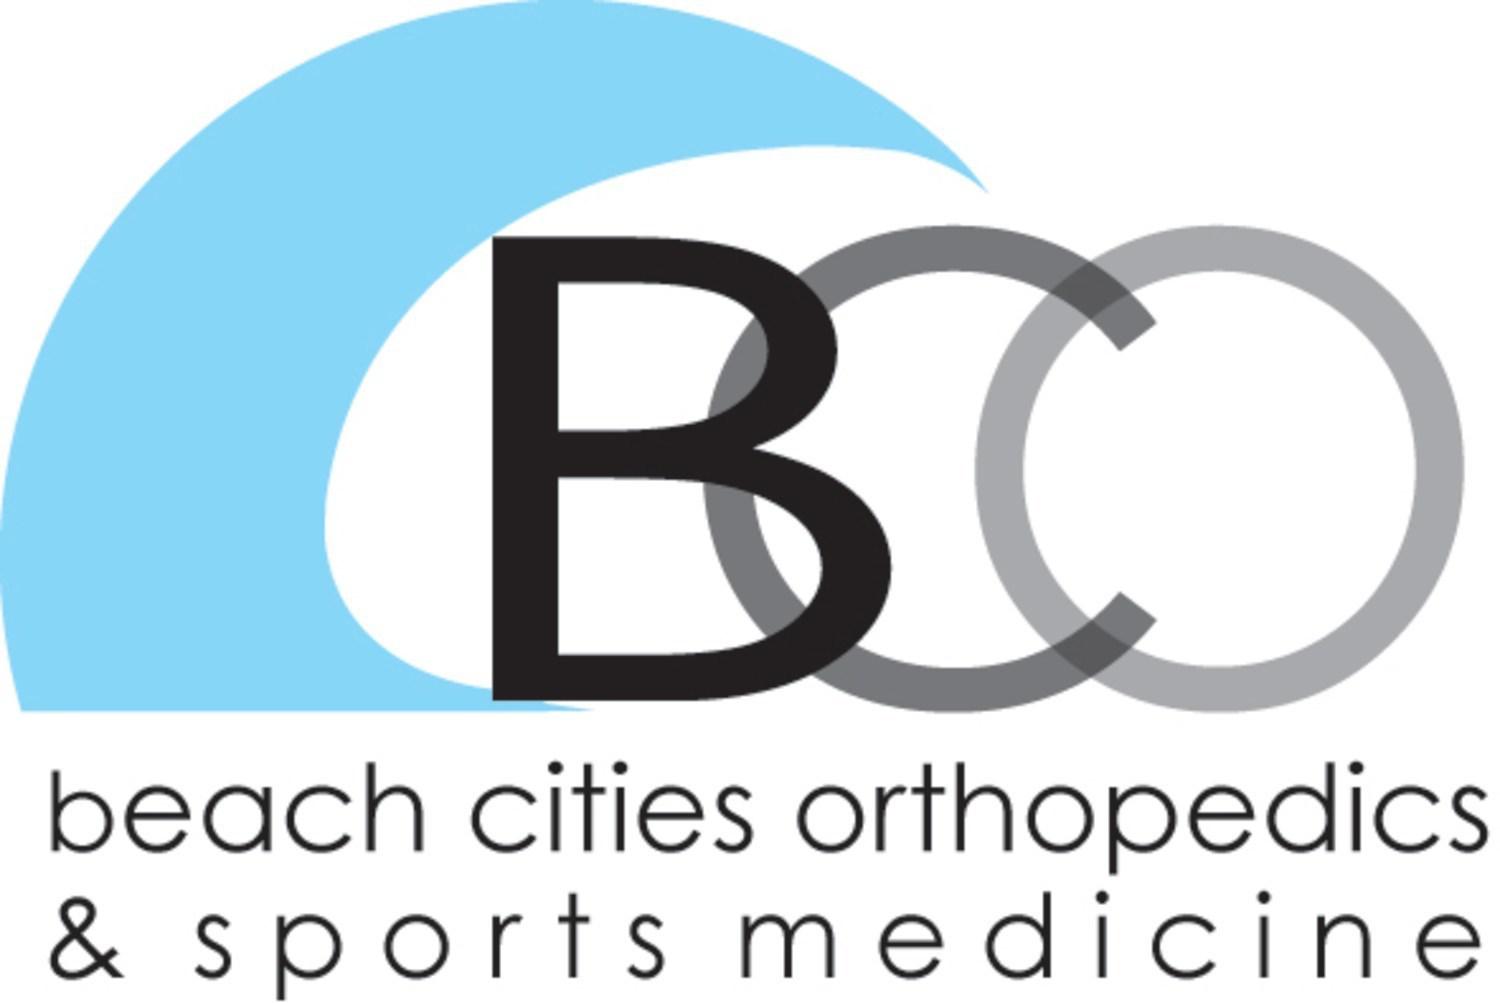 Beach cities orthopedics and sports medicine